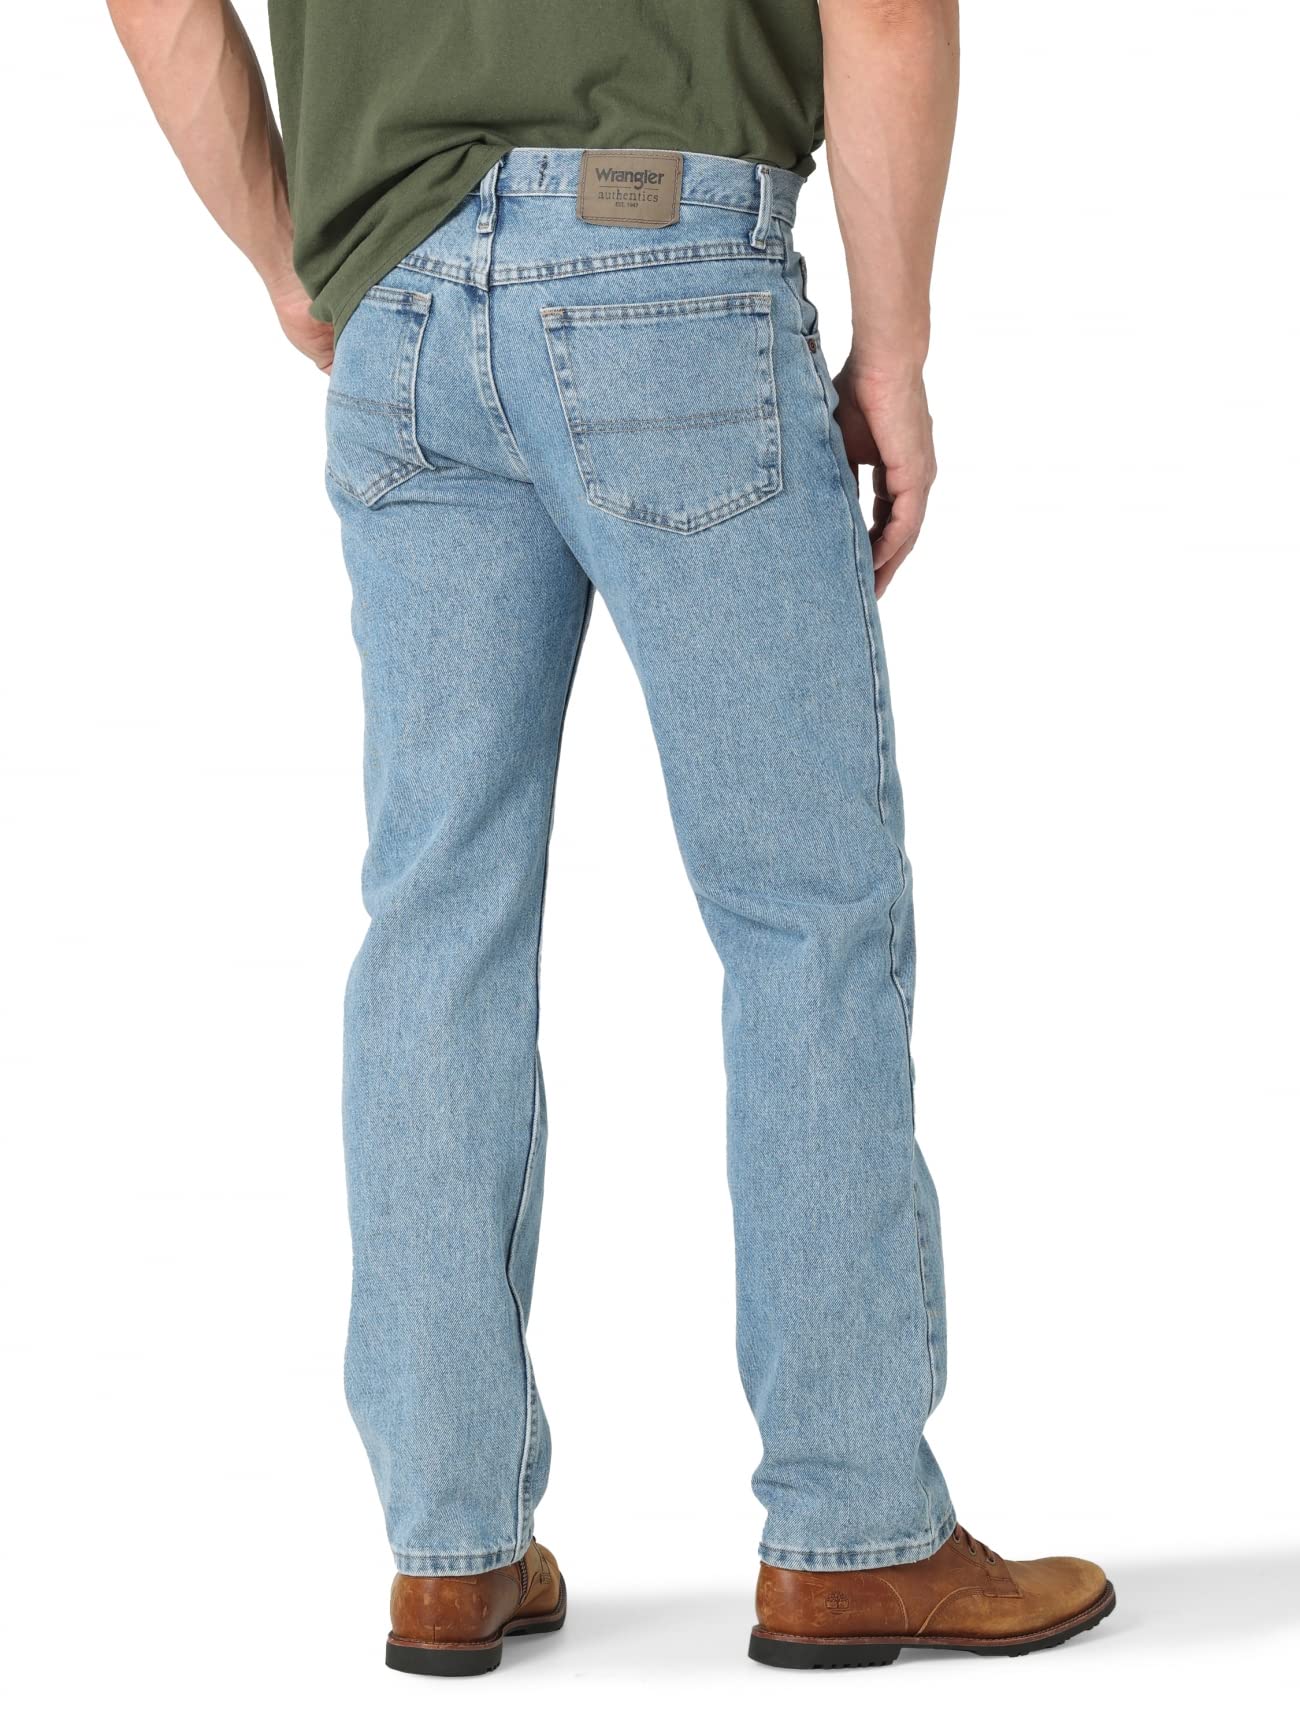 Wrangler Authentics Men's Classic 5-Pocket Regular Fit Cotton Jean, Light Stonewash, 32W x 28L